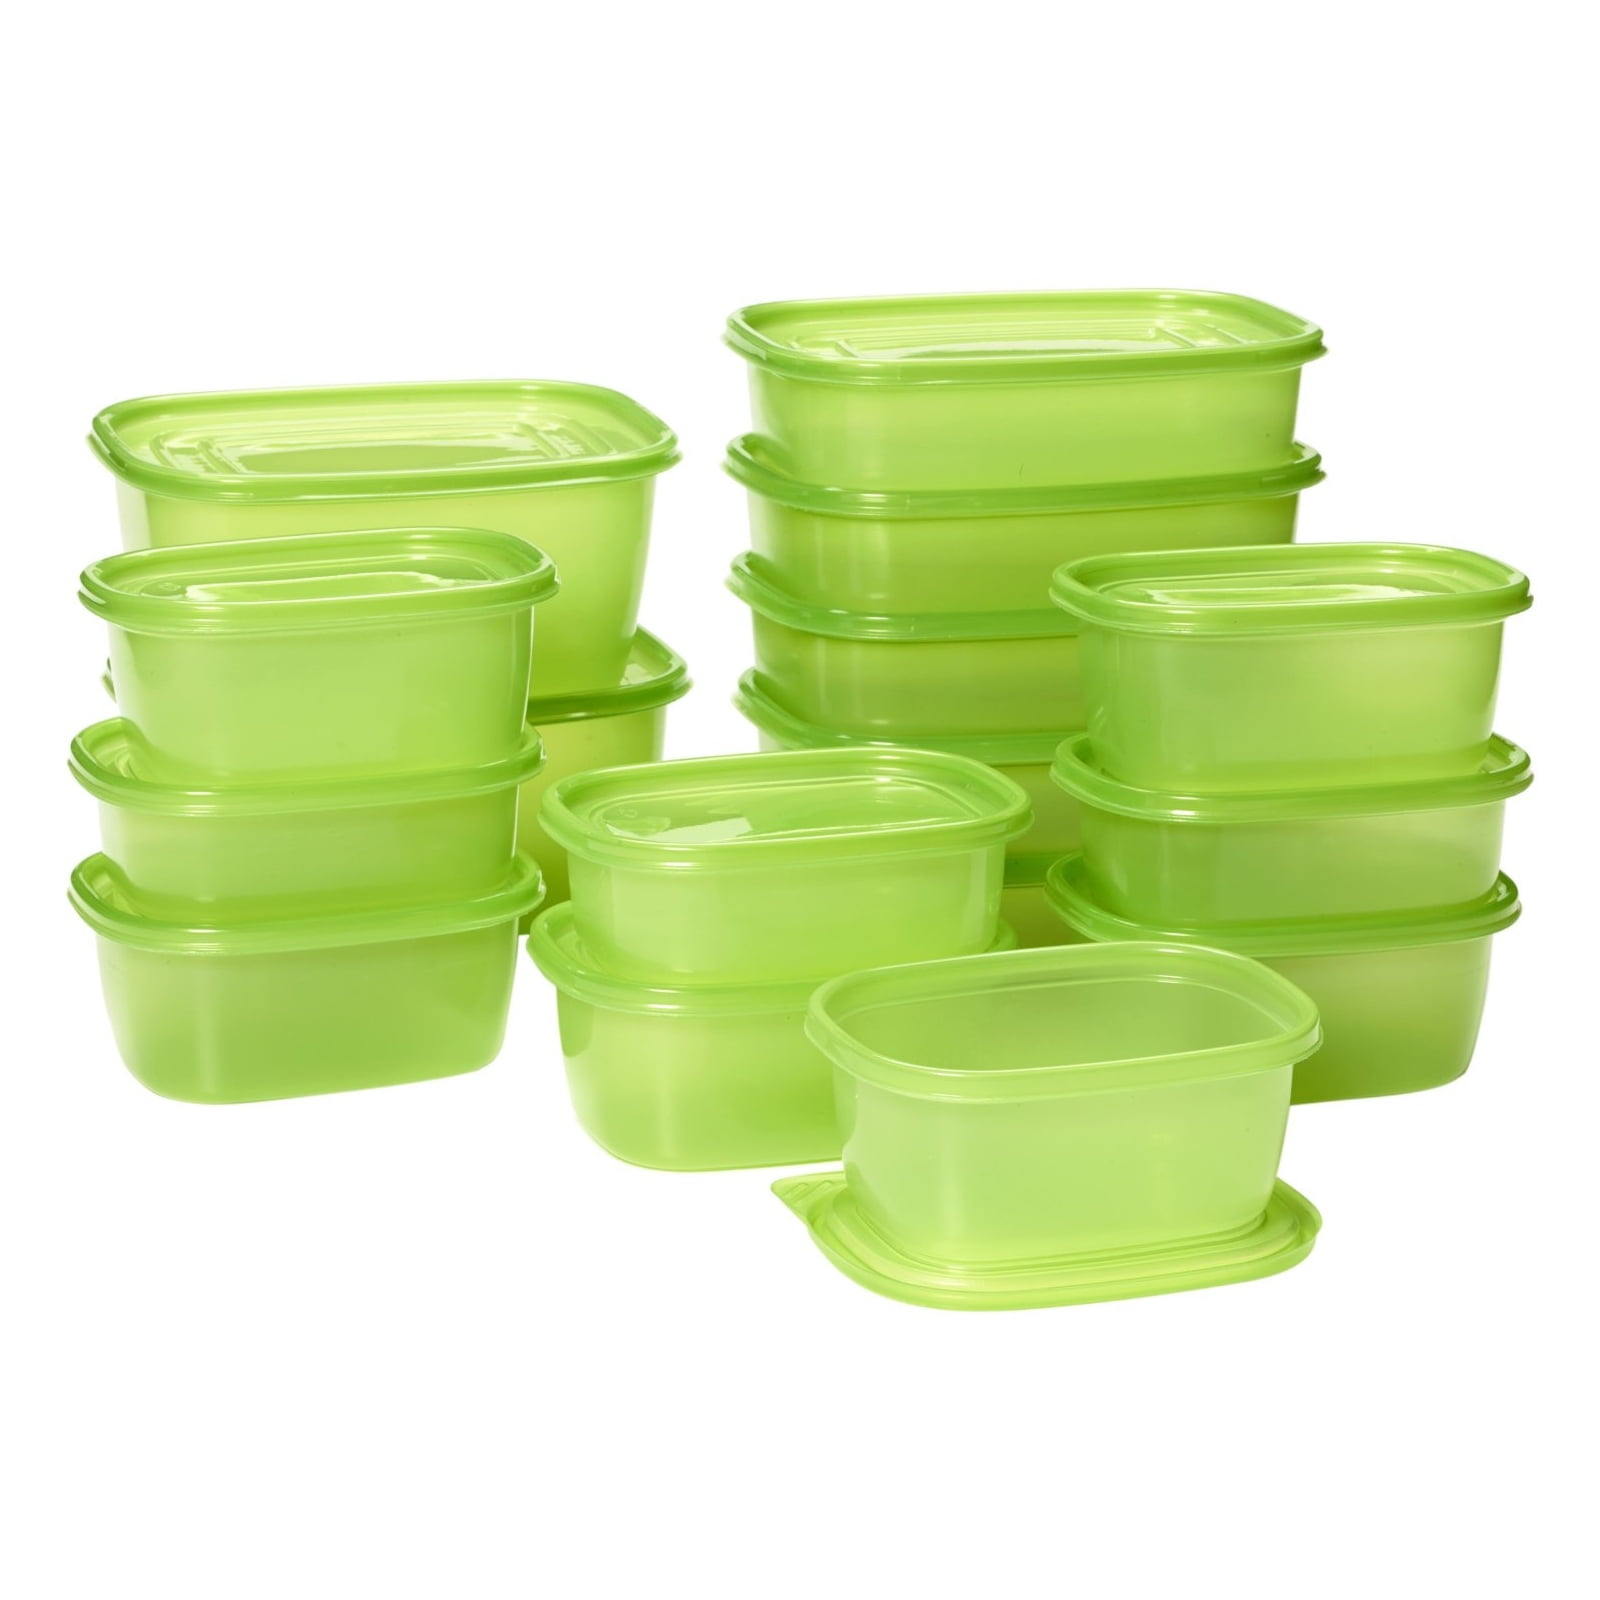 Alaska Bio freezer containers - 750ML - 3 pieces - Grace is Green